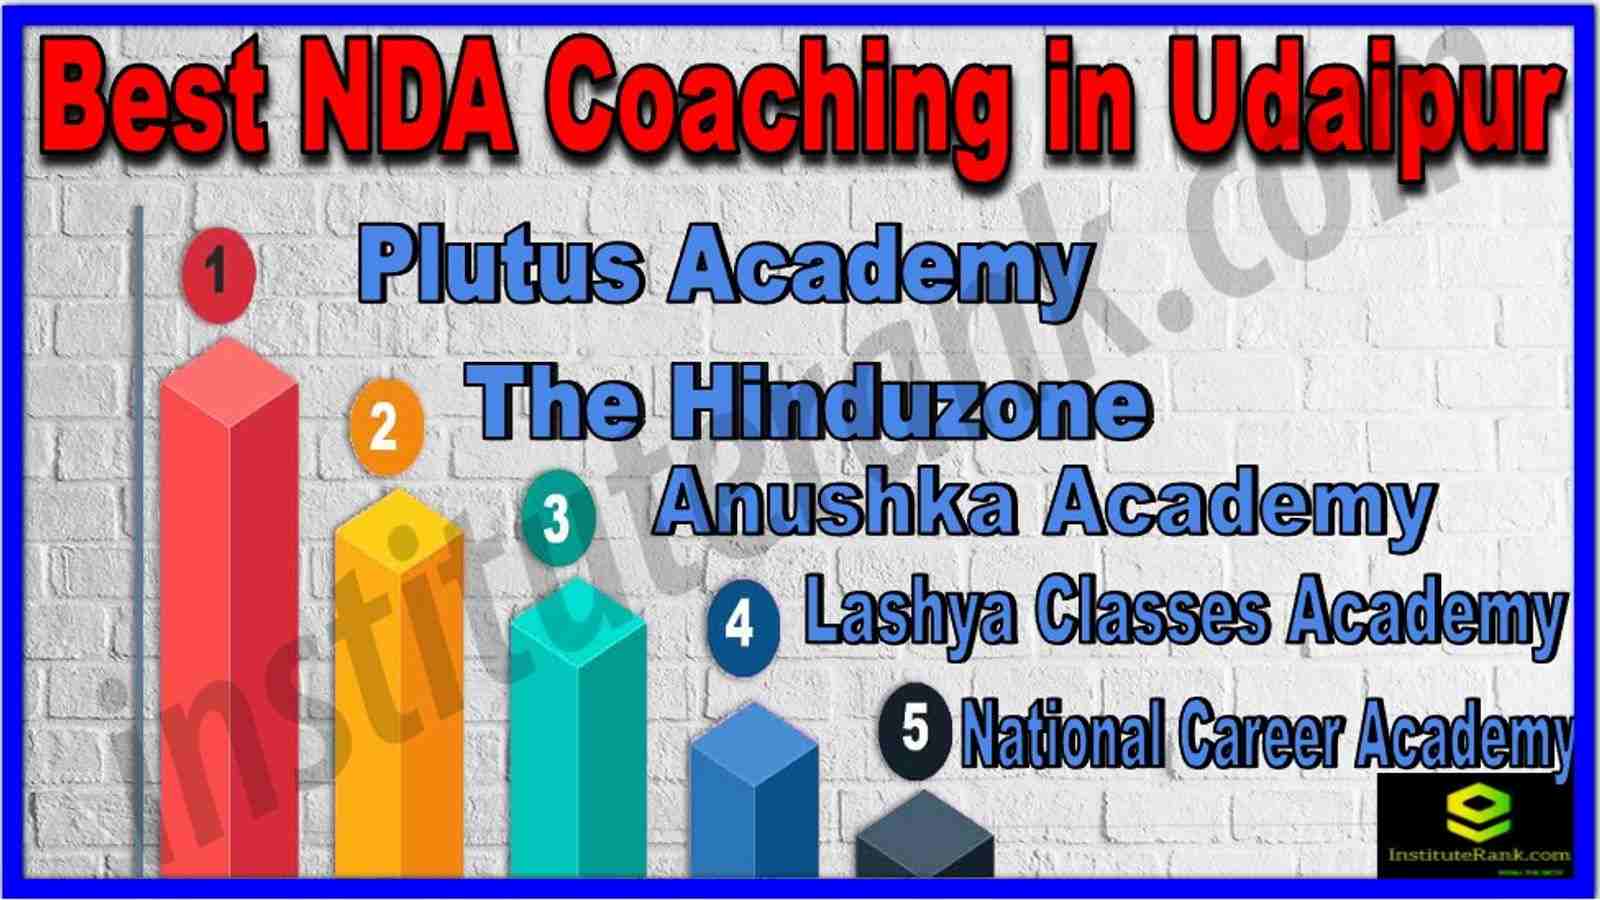 Best NDA Coaching in Udaipur